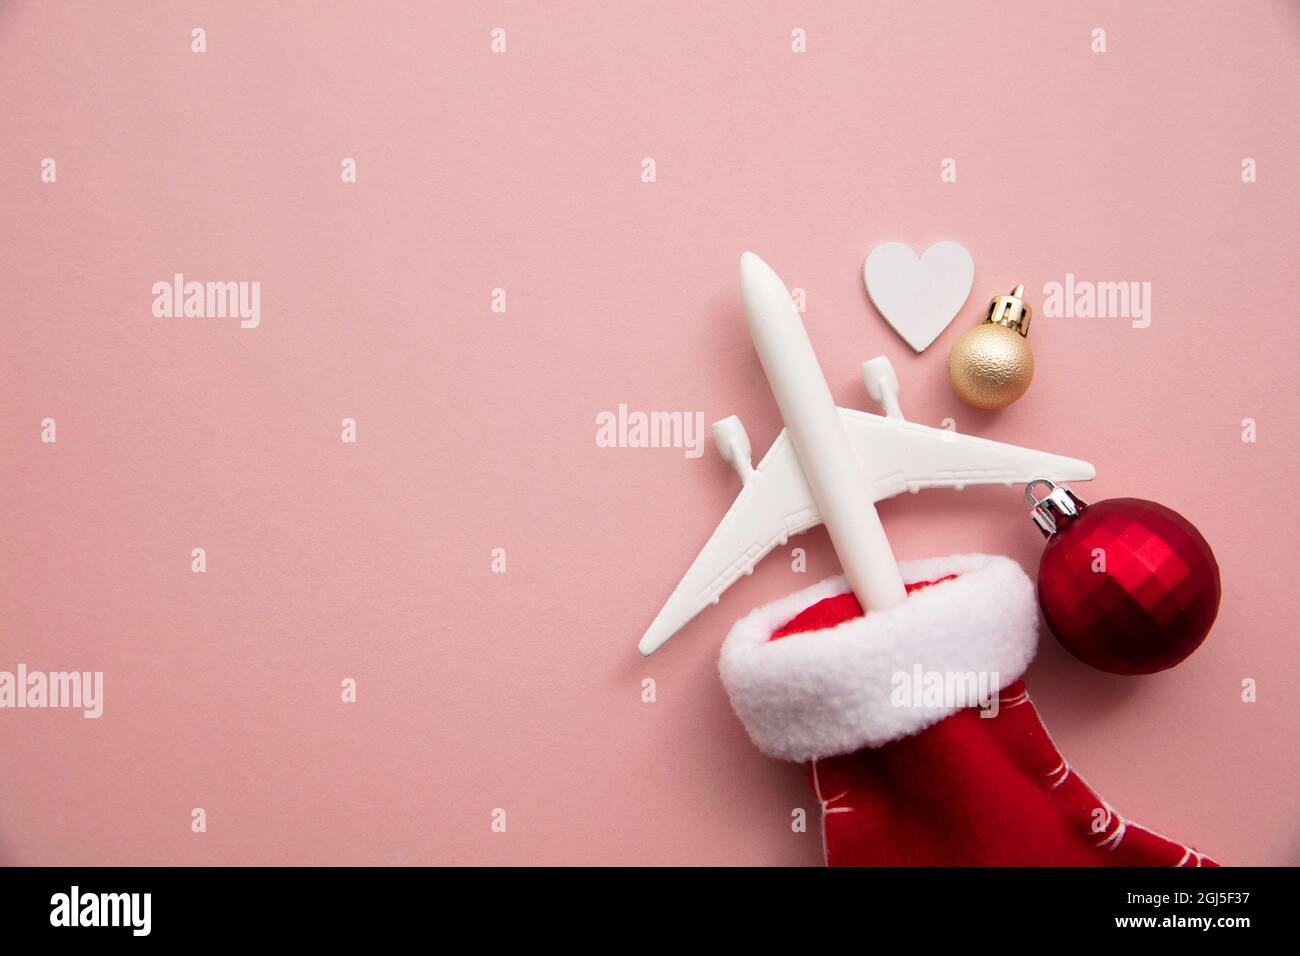 https://c8.alamy.com/comp/2GJ5F37/christmas-travel-background-model-of-an-airplane-with-a-festive-stocking-2GJ5F37.jpg